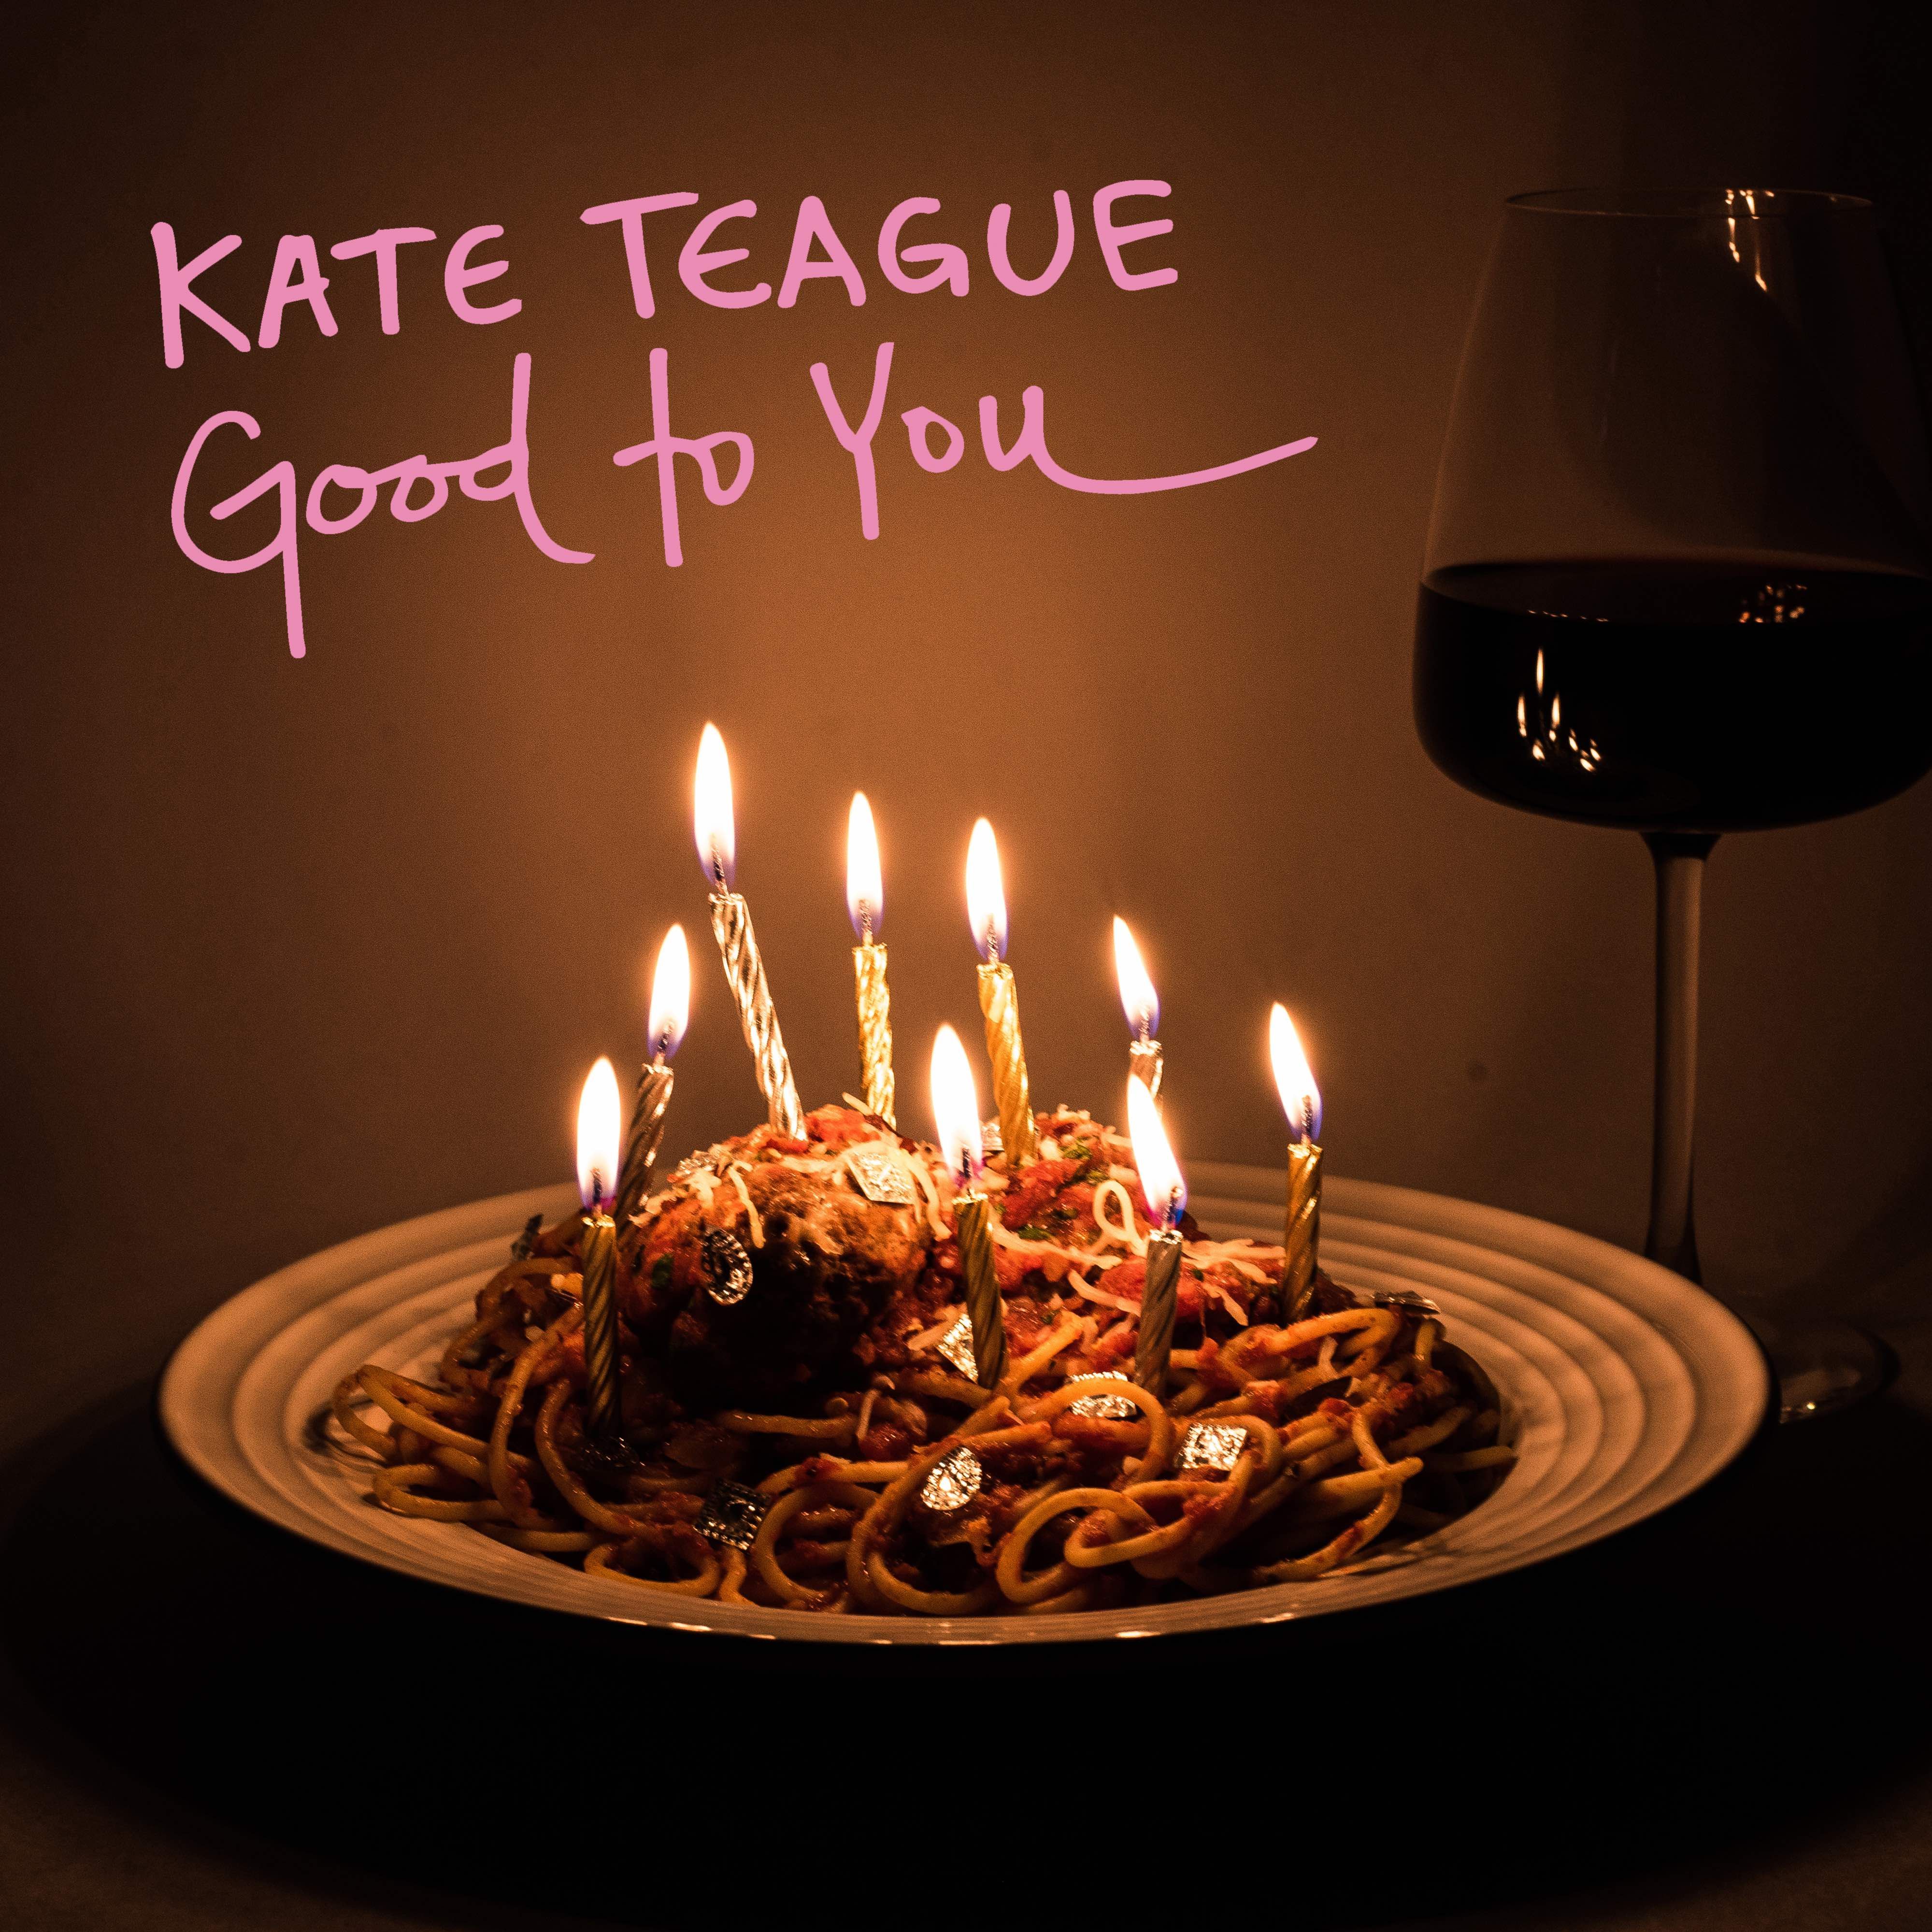 Kate Teague – “Good to You”